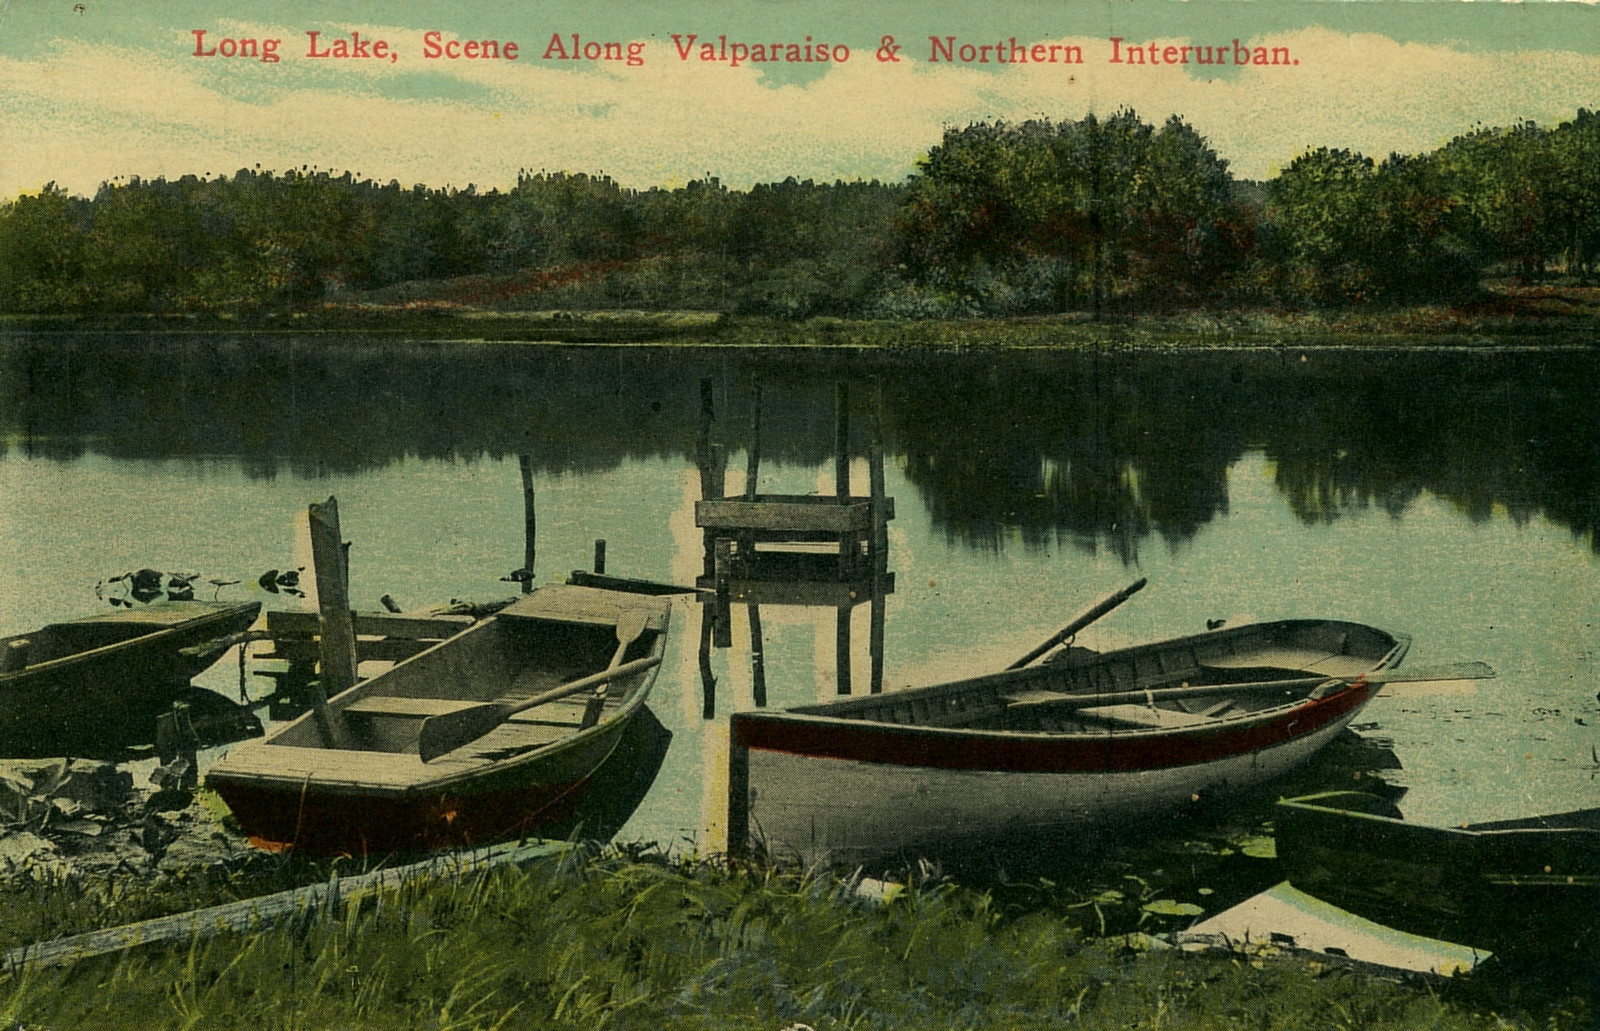 Long Lake, Scene Along Valparaiso and Northern Interurban, 1911 - Valparaiso, Indiana